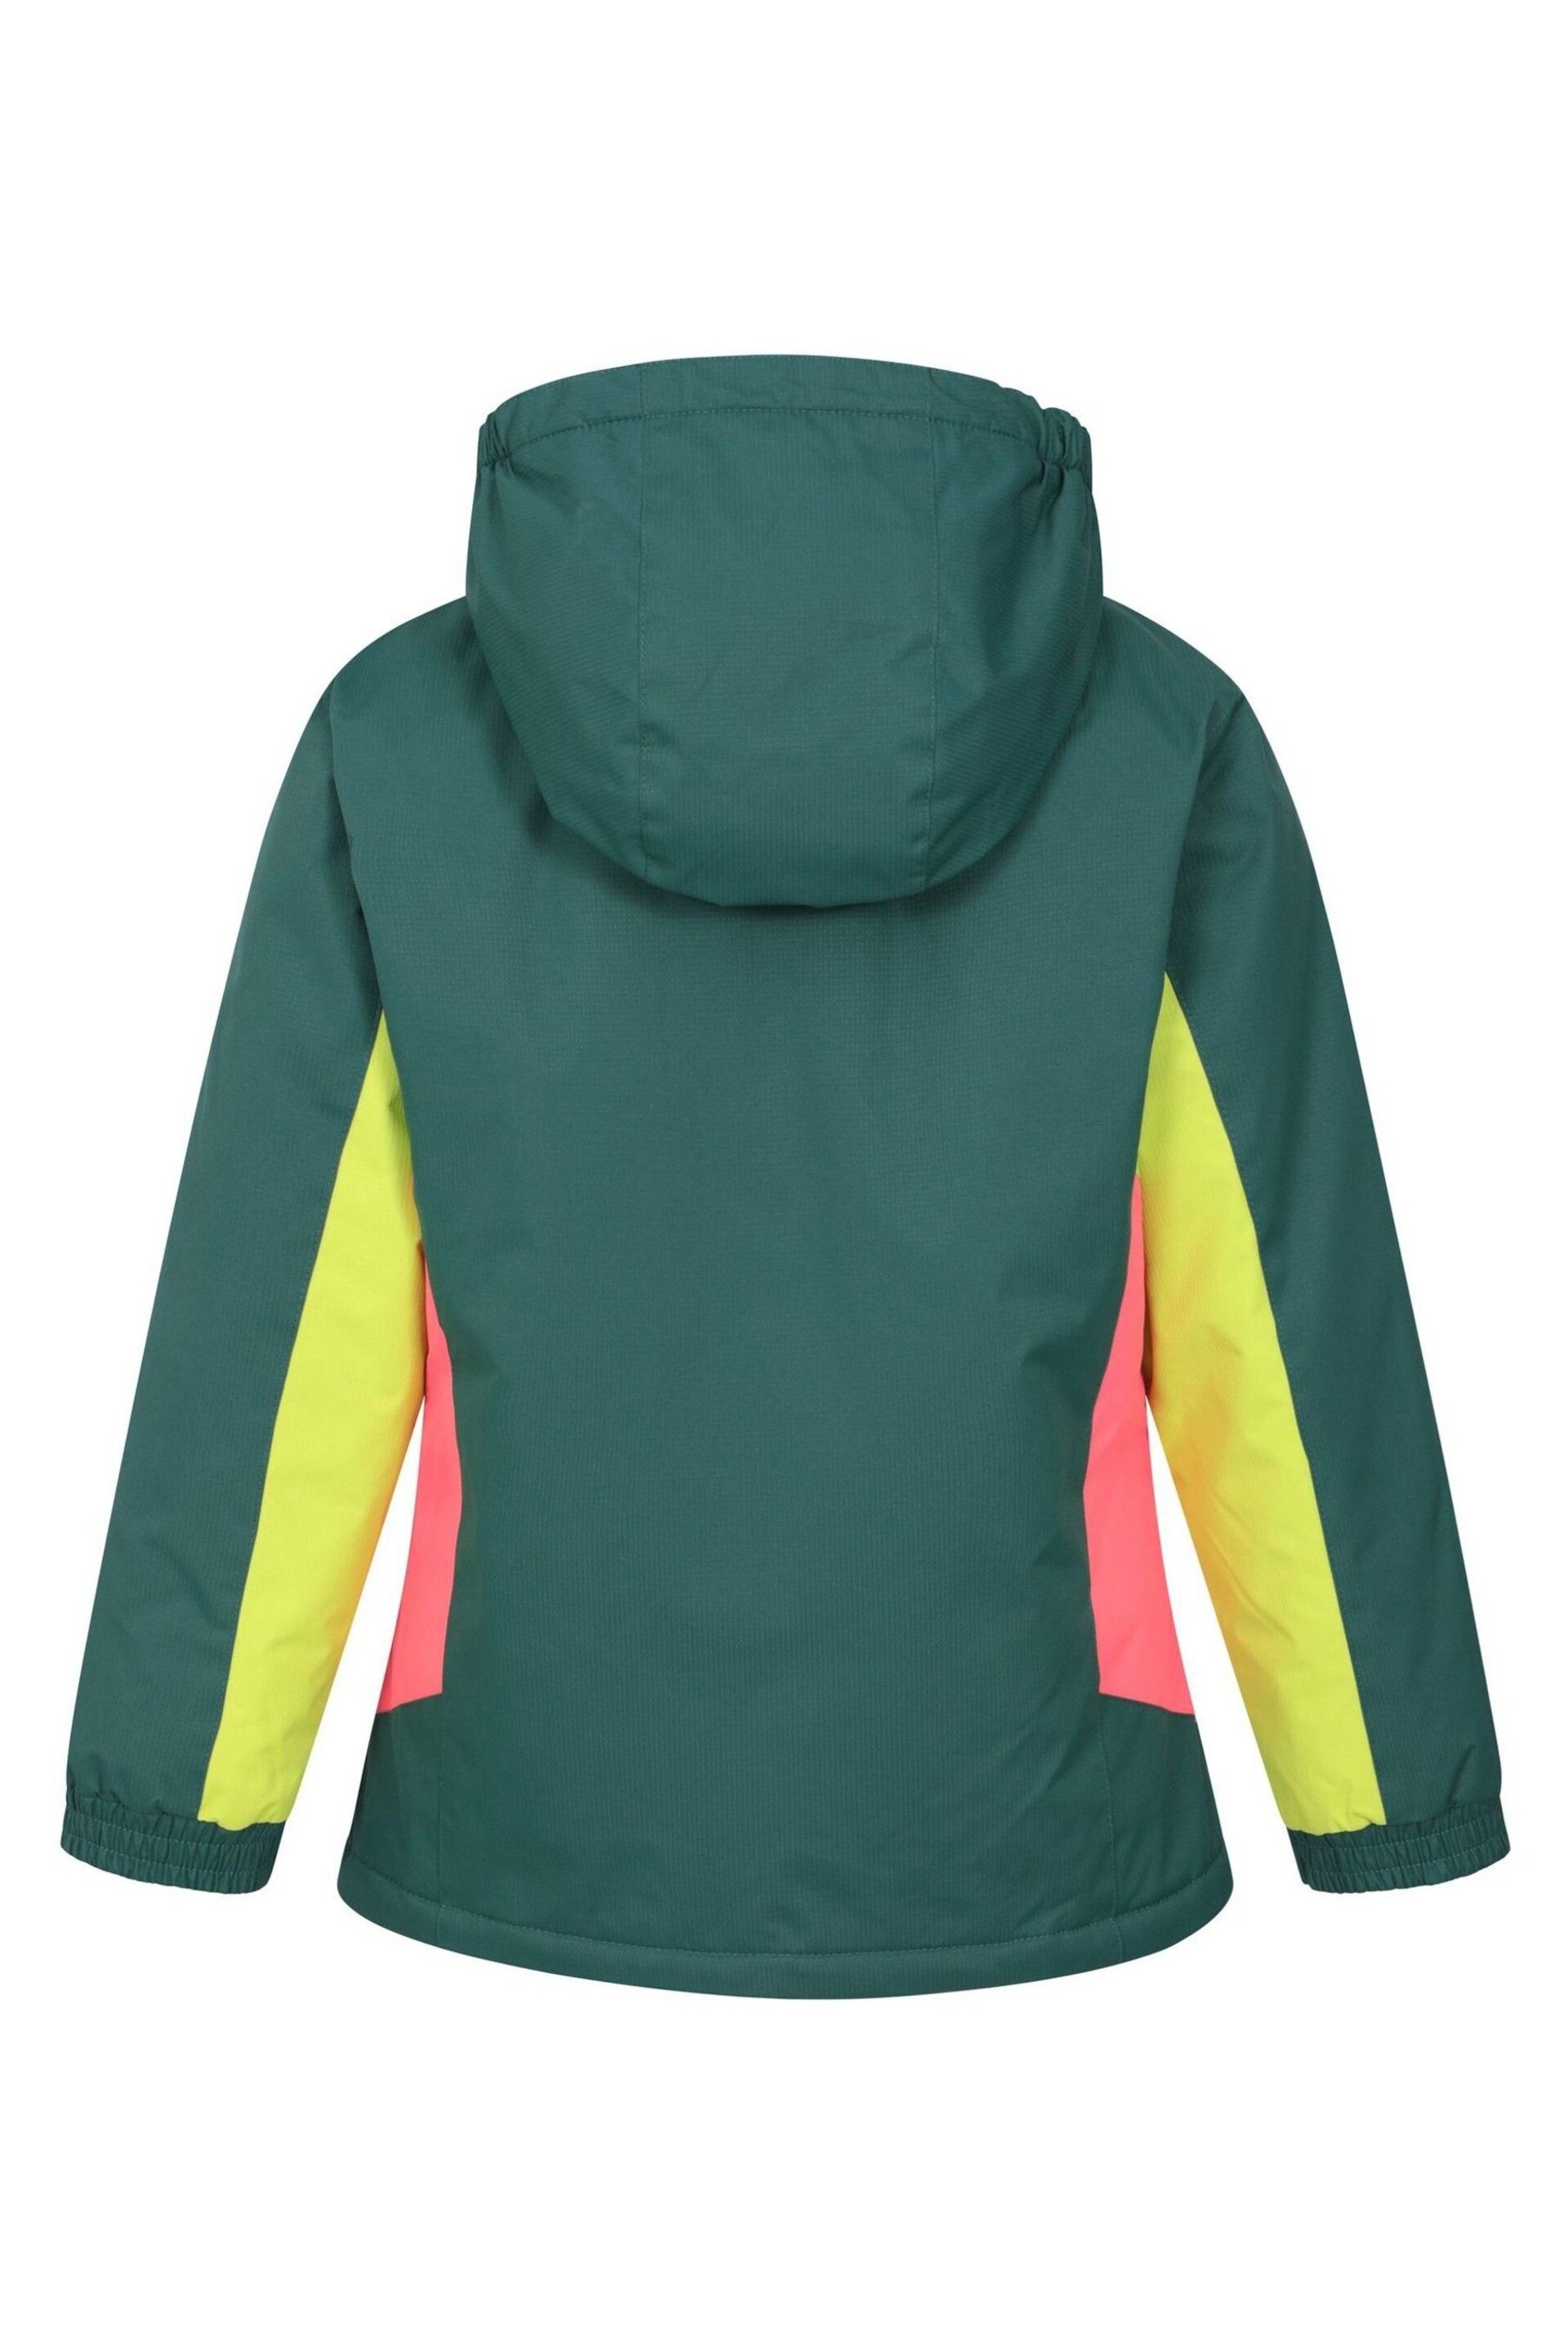 Mountain Warehouse Green Honey Ski Jacket - Kids - Image 2 of 4